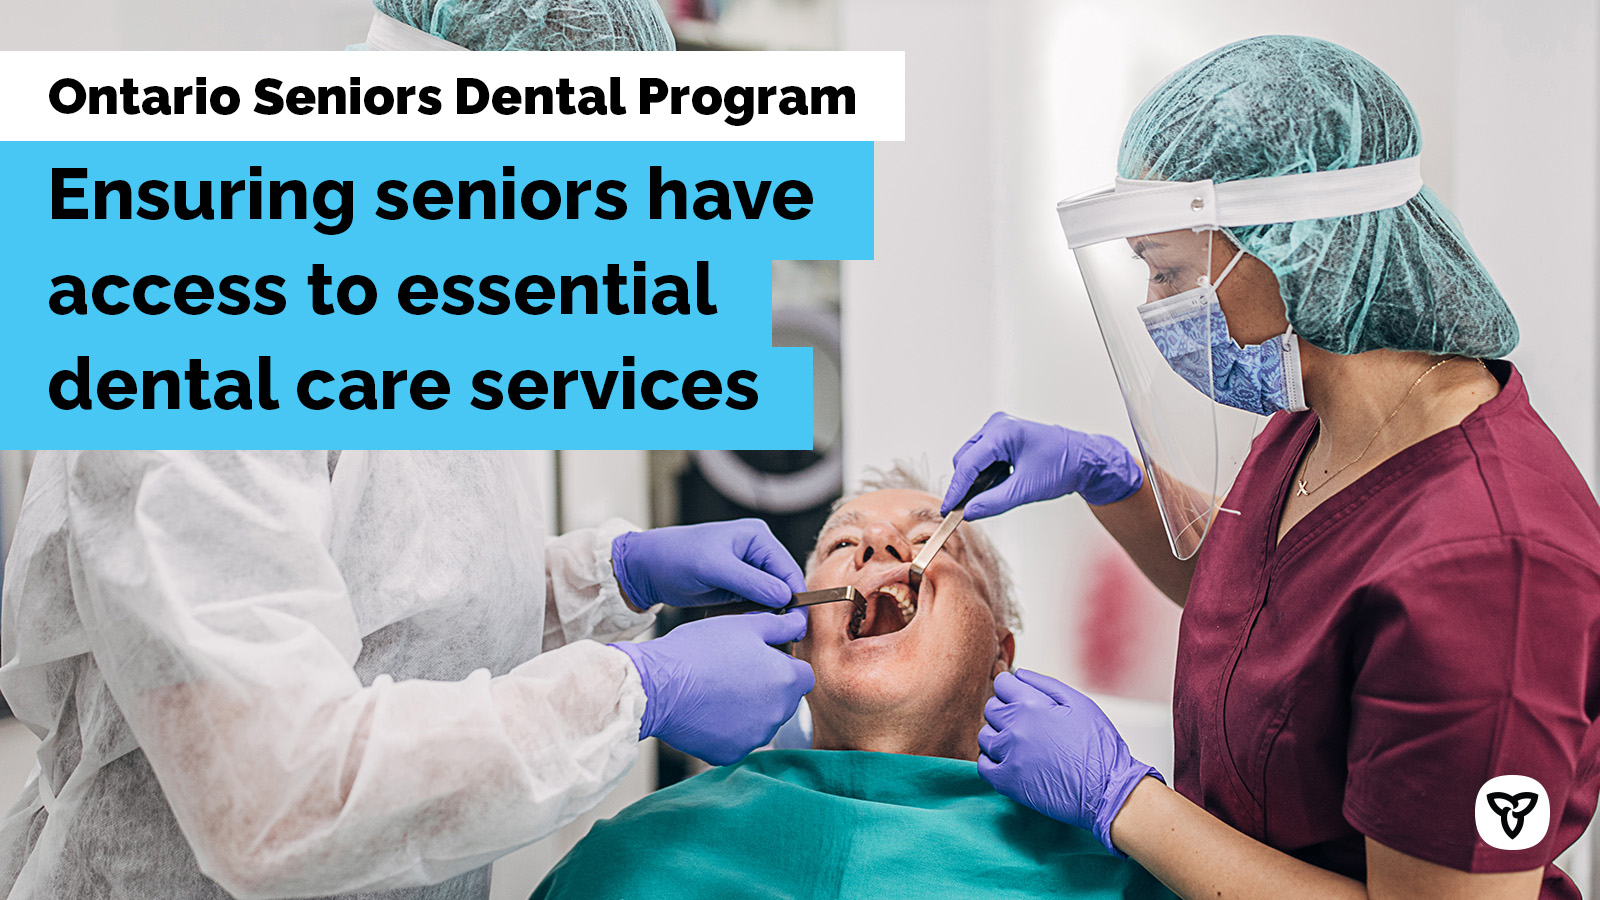 Toronto Public Health expanded dental care access for seniors